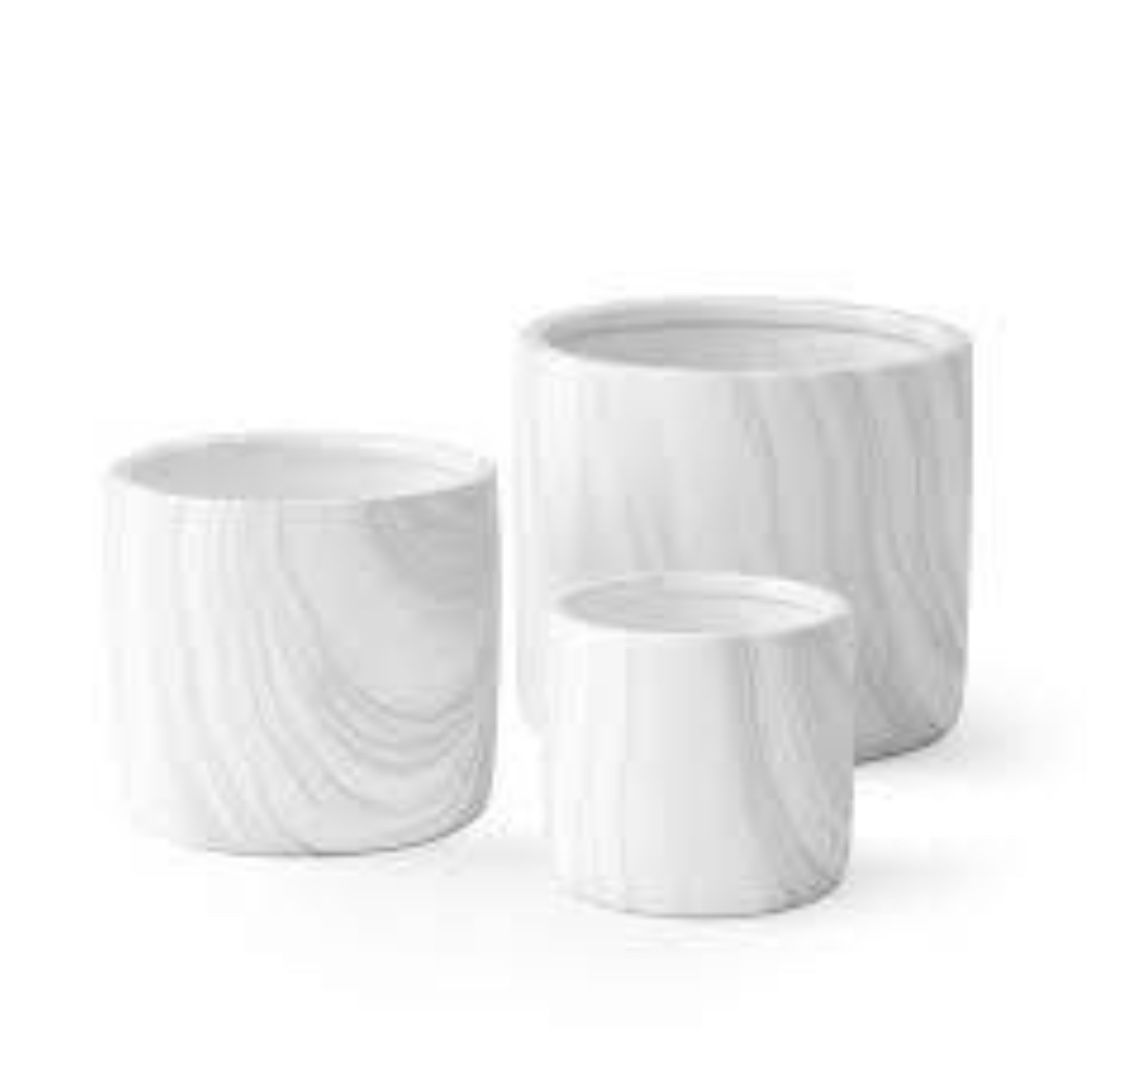 Set of 3 White Ceramic Planter Pots by Dodoko –